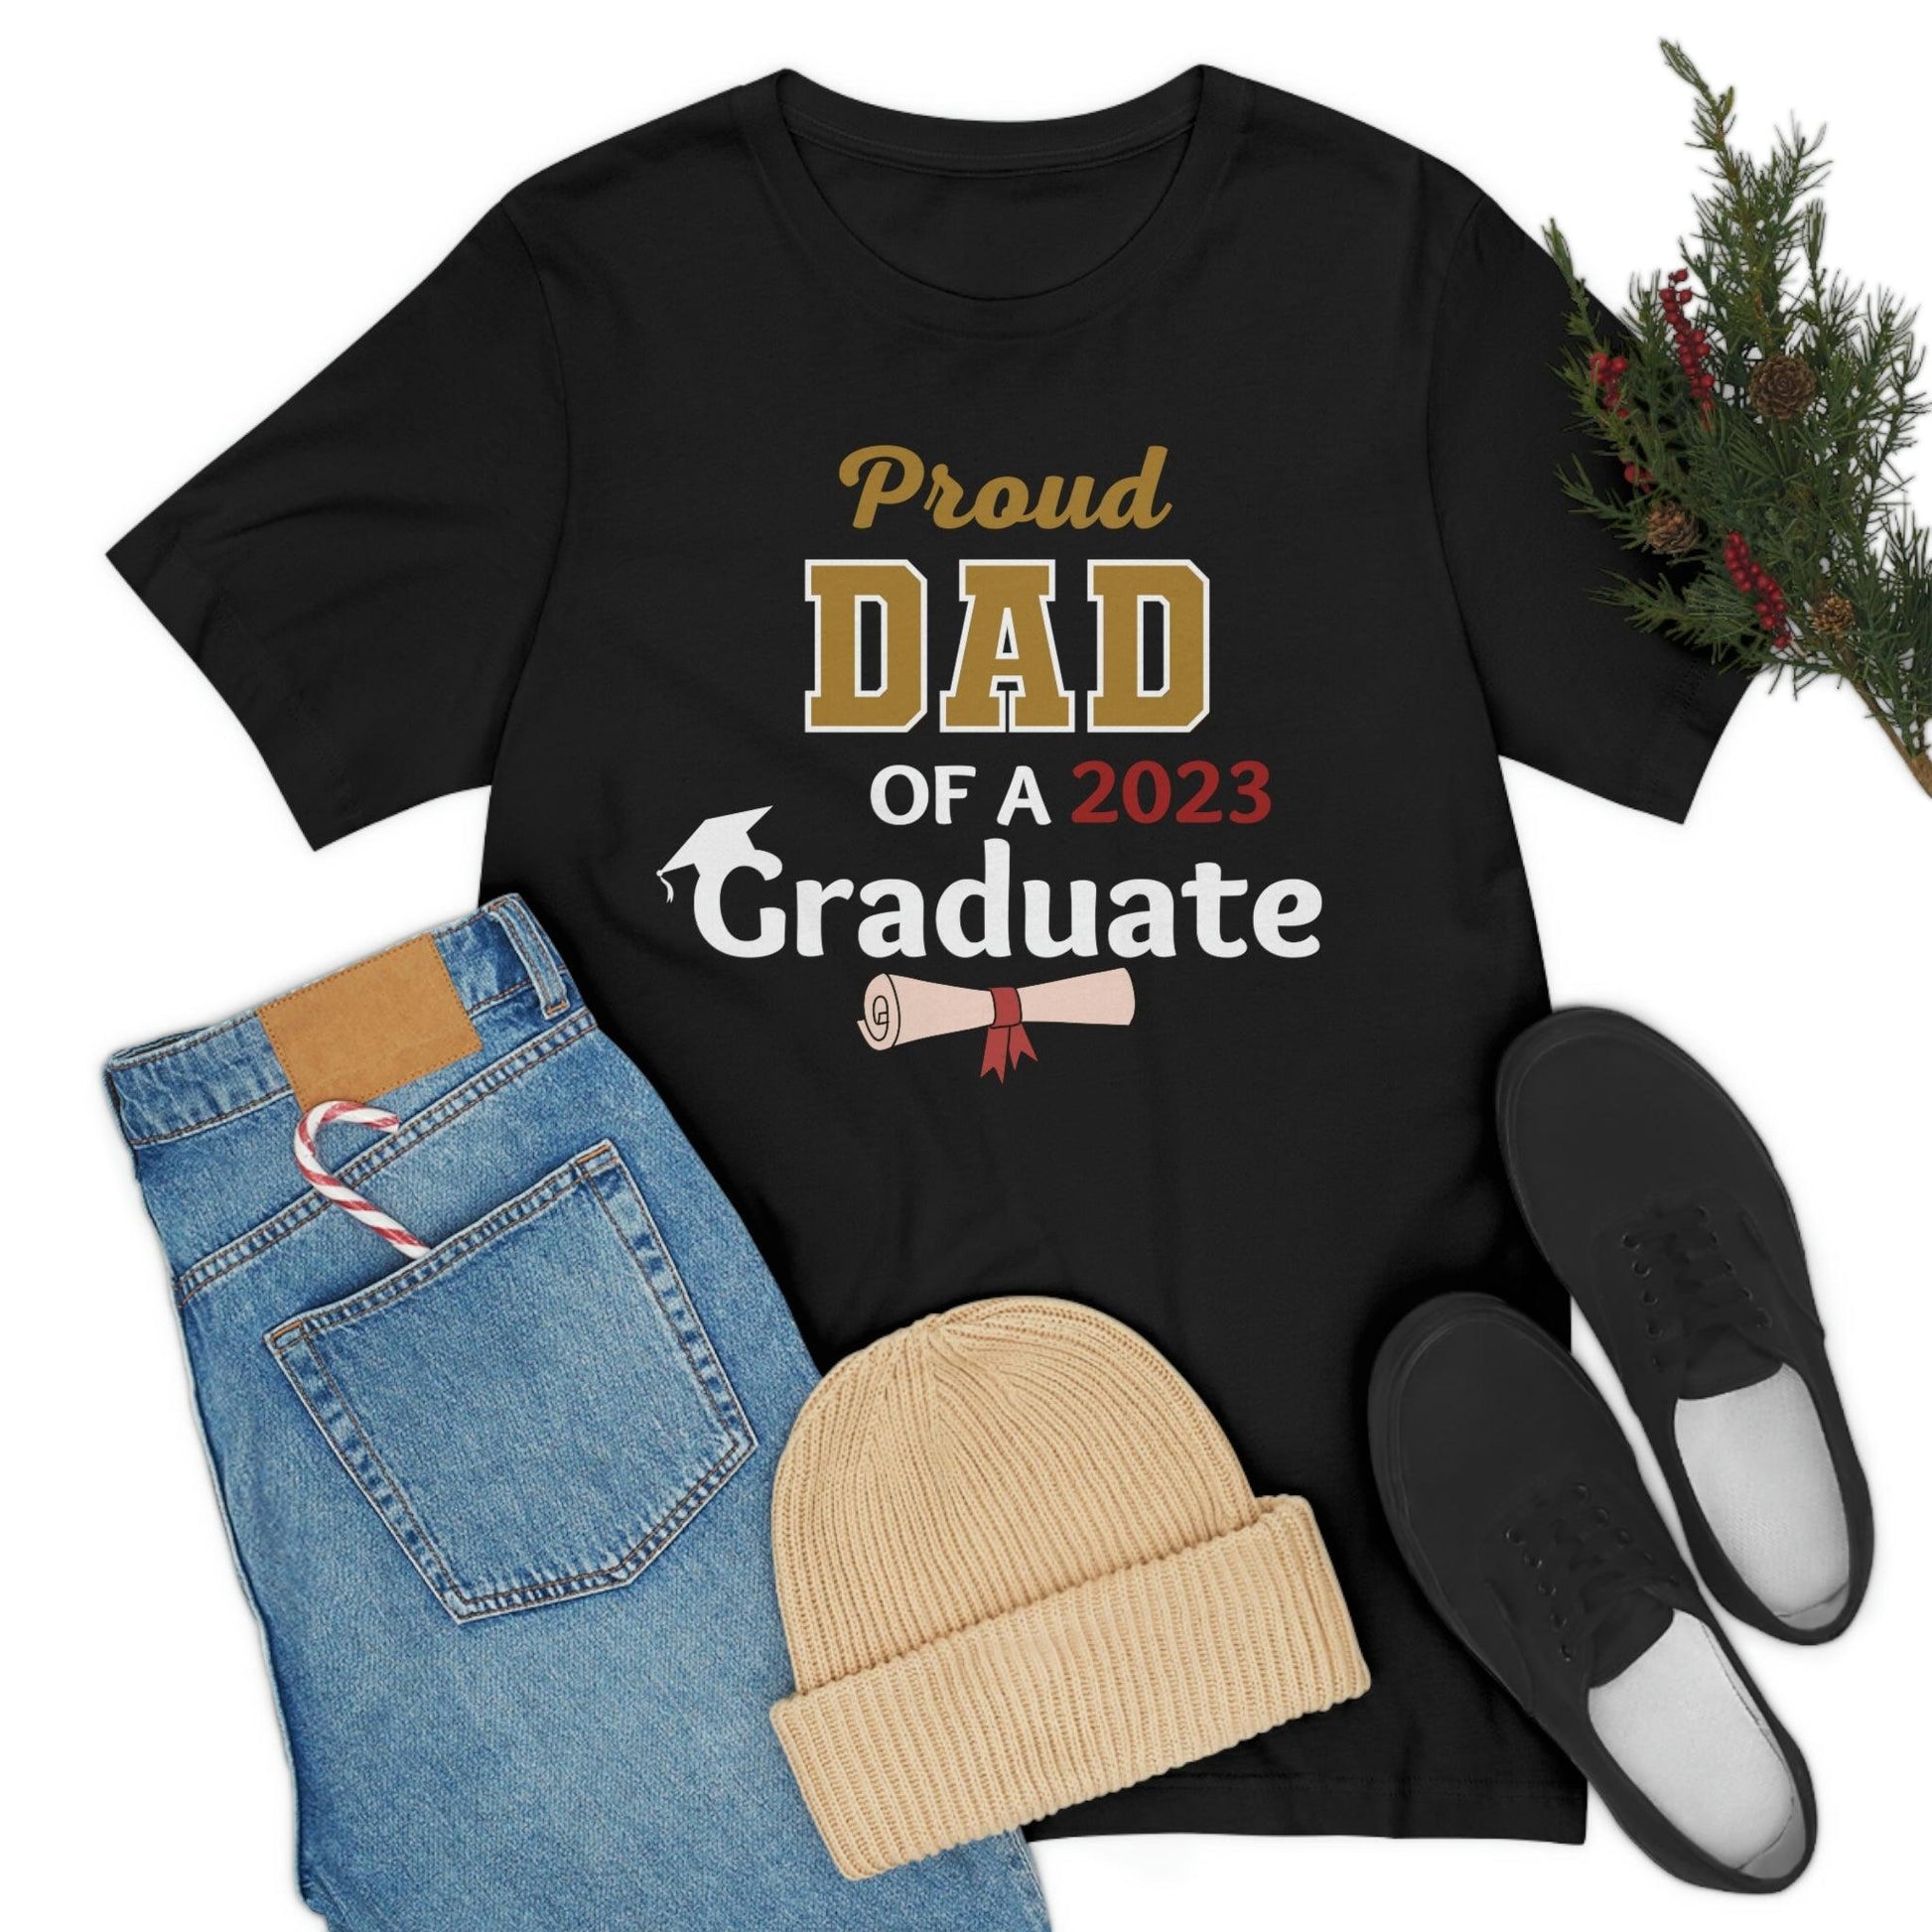 Proud Dad of a Graduate shirt - Graduation shirt - Graduation gift - Giftsmojo